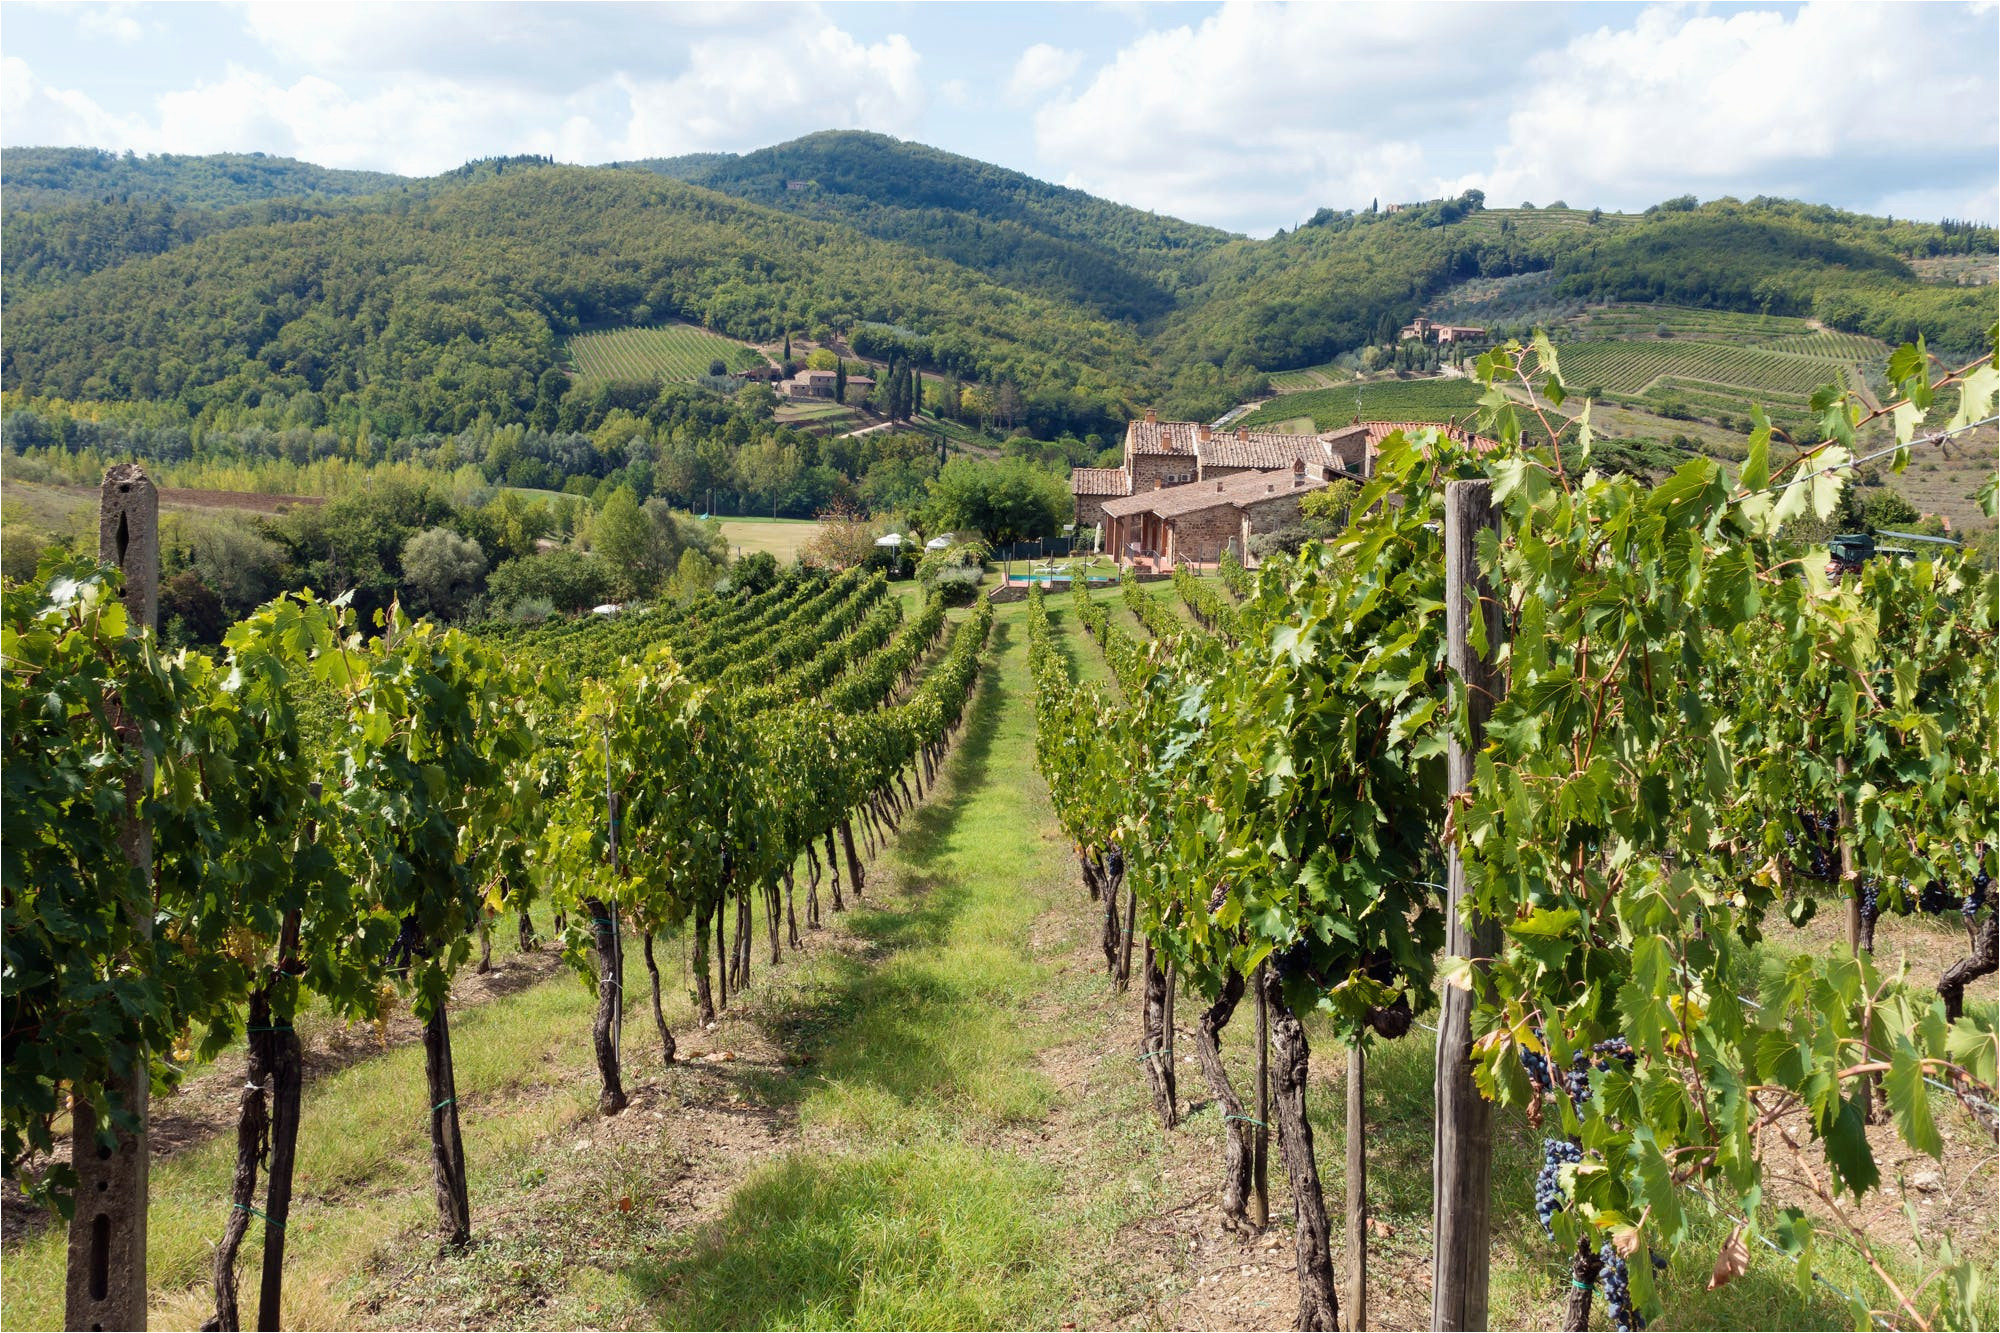 Wineries In Tuscany Italy Map Chianti Italy Travel Guide to Chianti Wine Region In Tuscany Italy